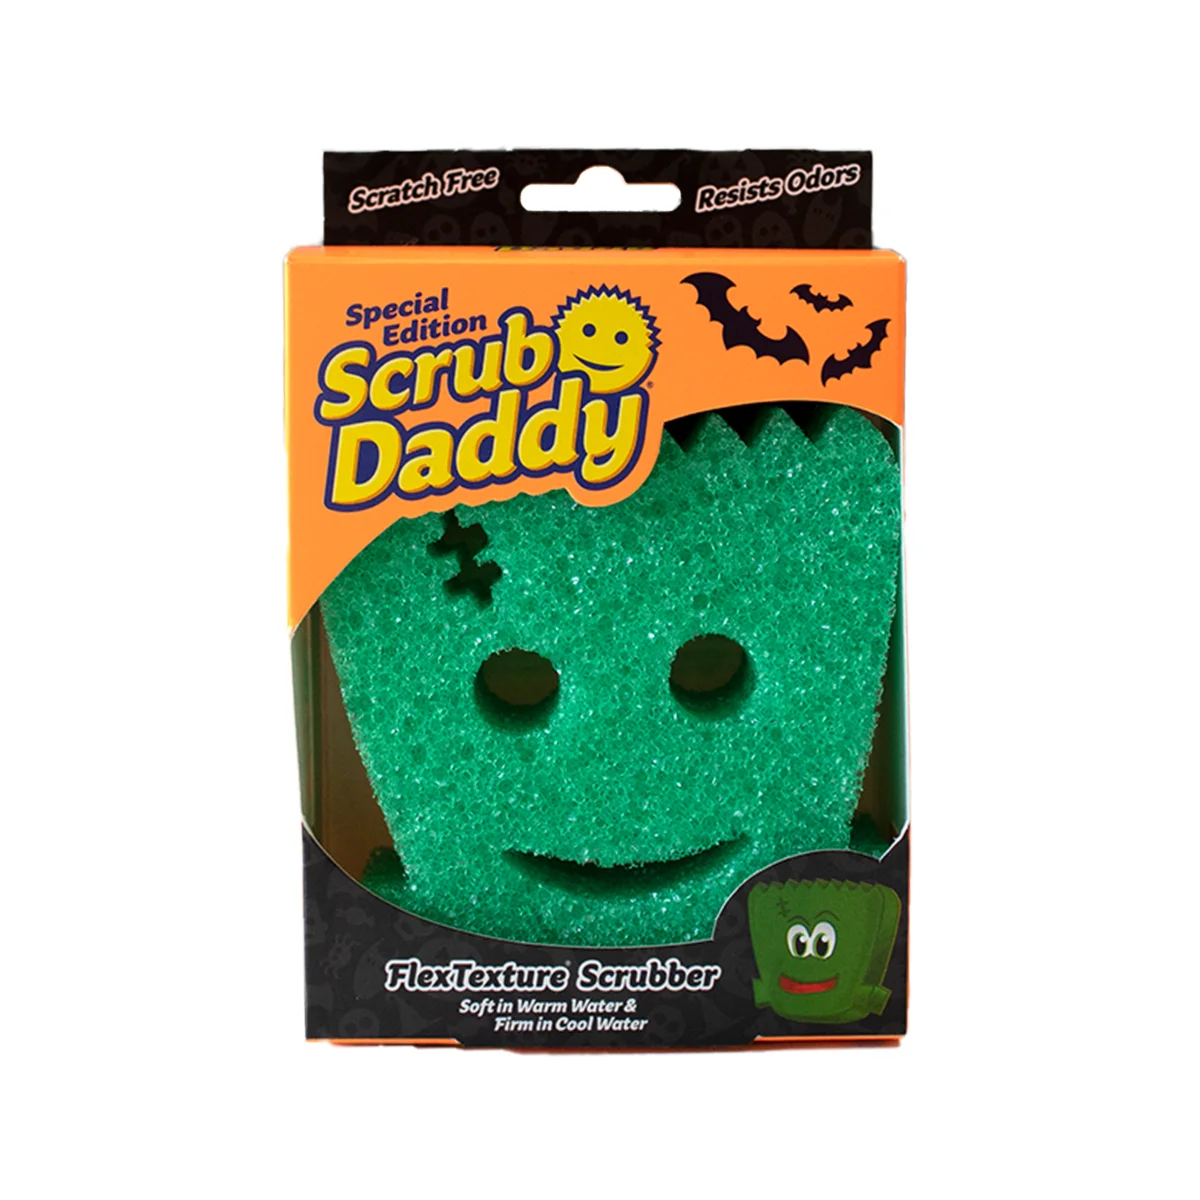 Scrub Daddy Special Edition Halloween Sponges Set of 2